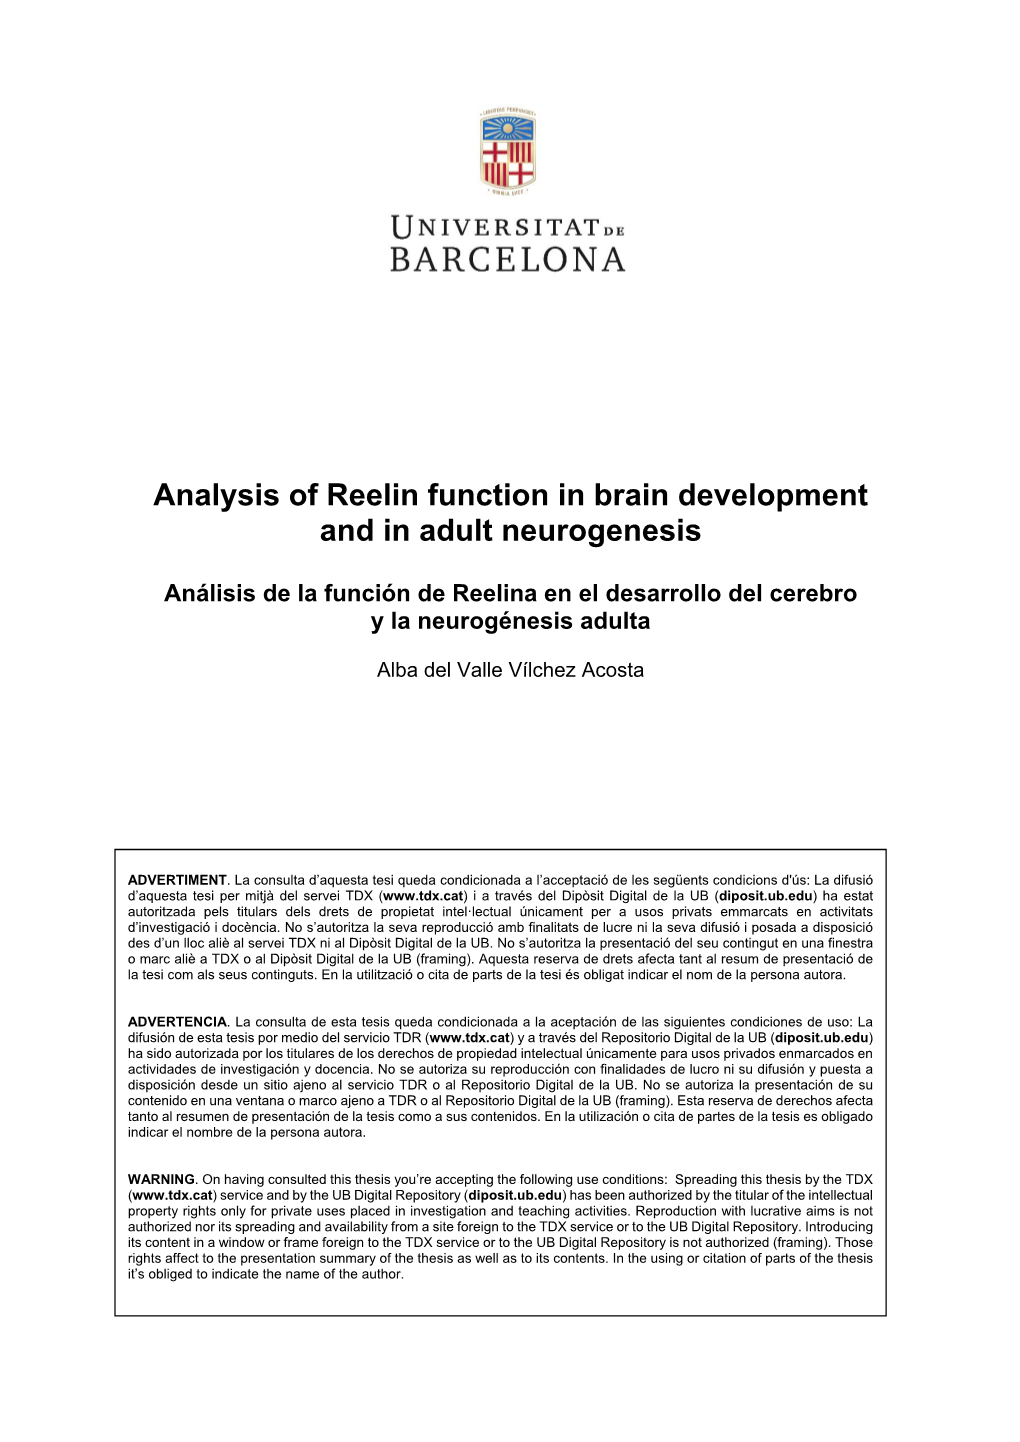 Analysis of Reelin Function in Brain Development and in Adult Neurogenesis